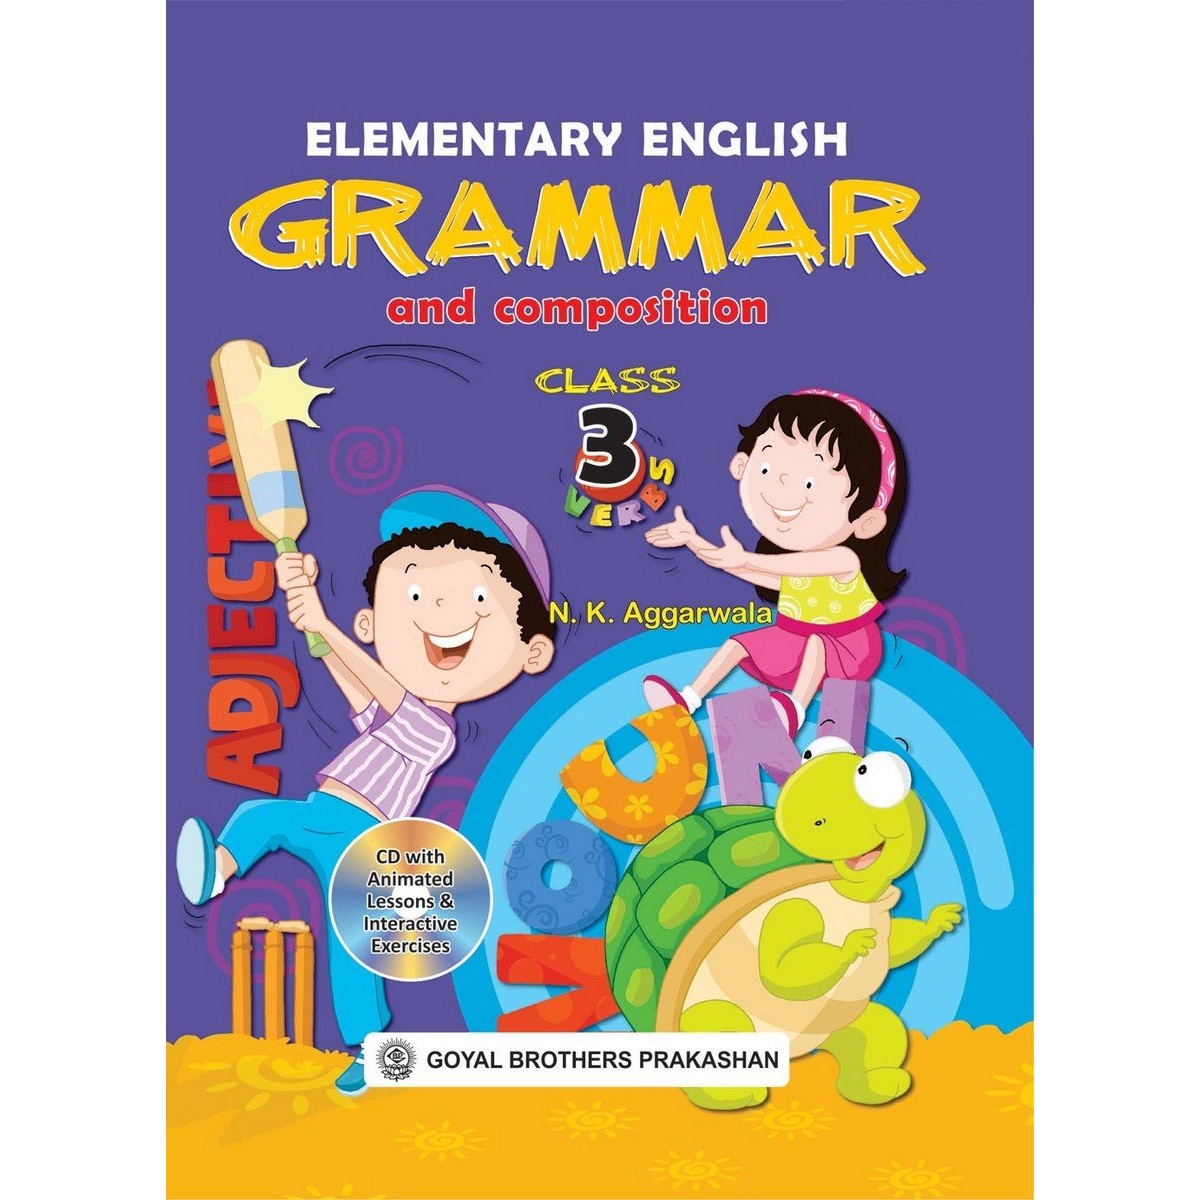 Elementary english. Elementary English Grammar. Elementary English Grammar and Composition. Elementary English Grammar and Composition 5. Popular Grammar and Composition.